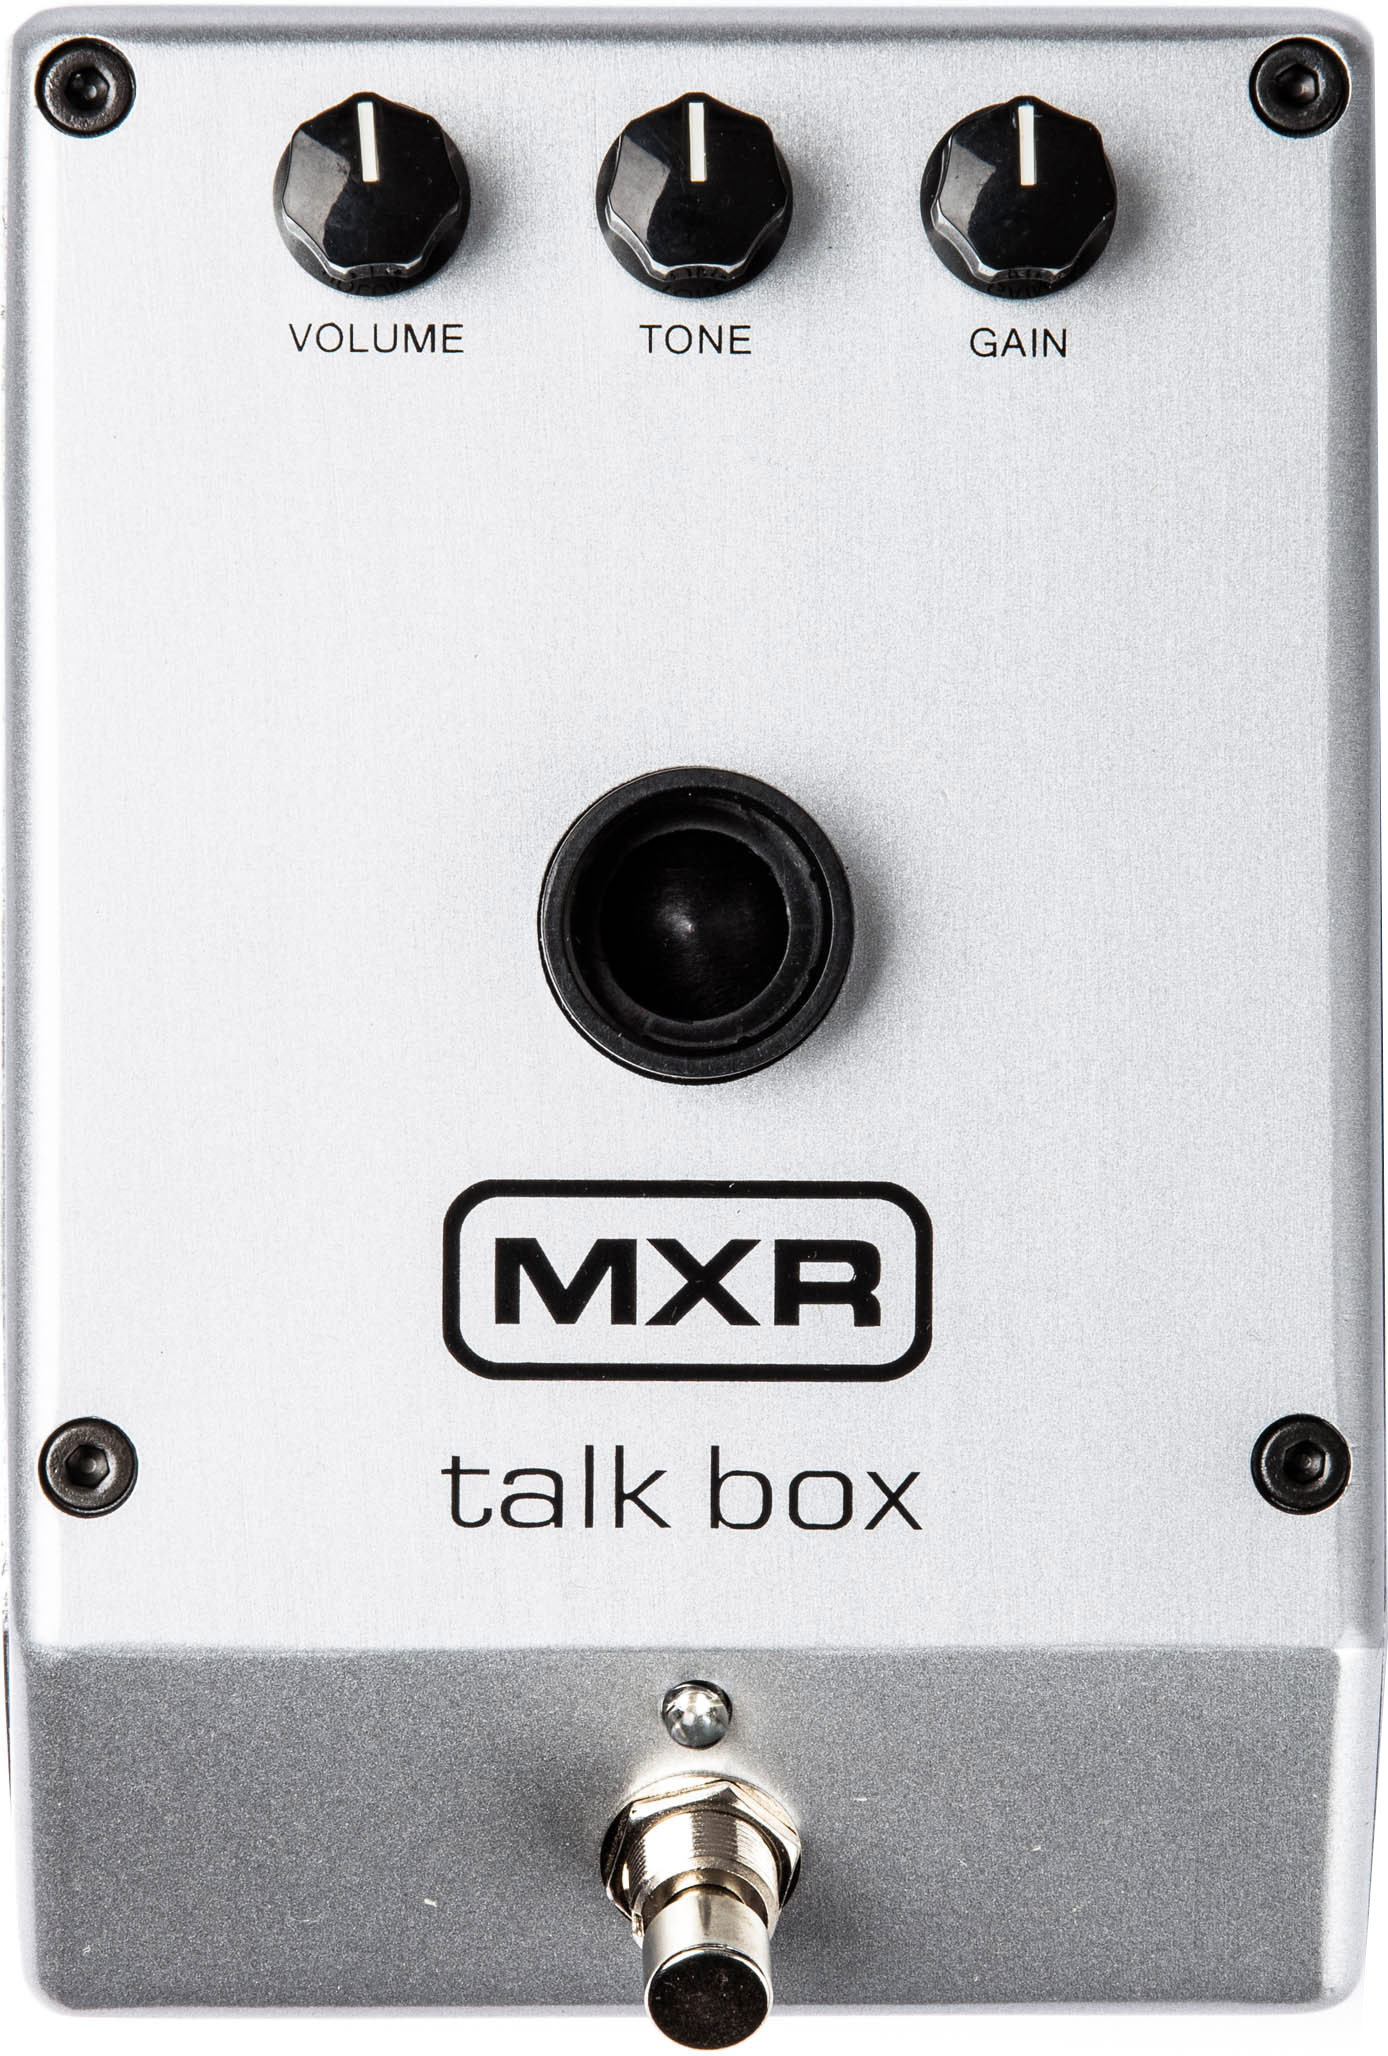 MXR M222 Talk Box | guitarguitar